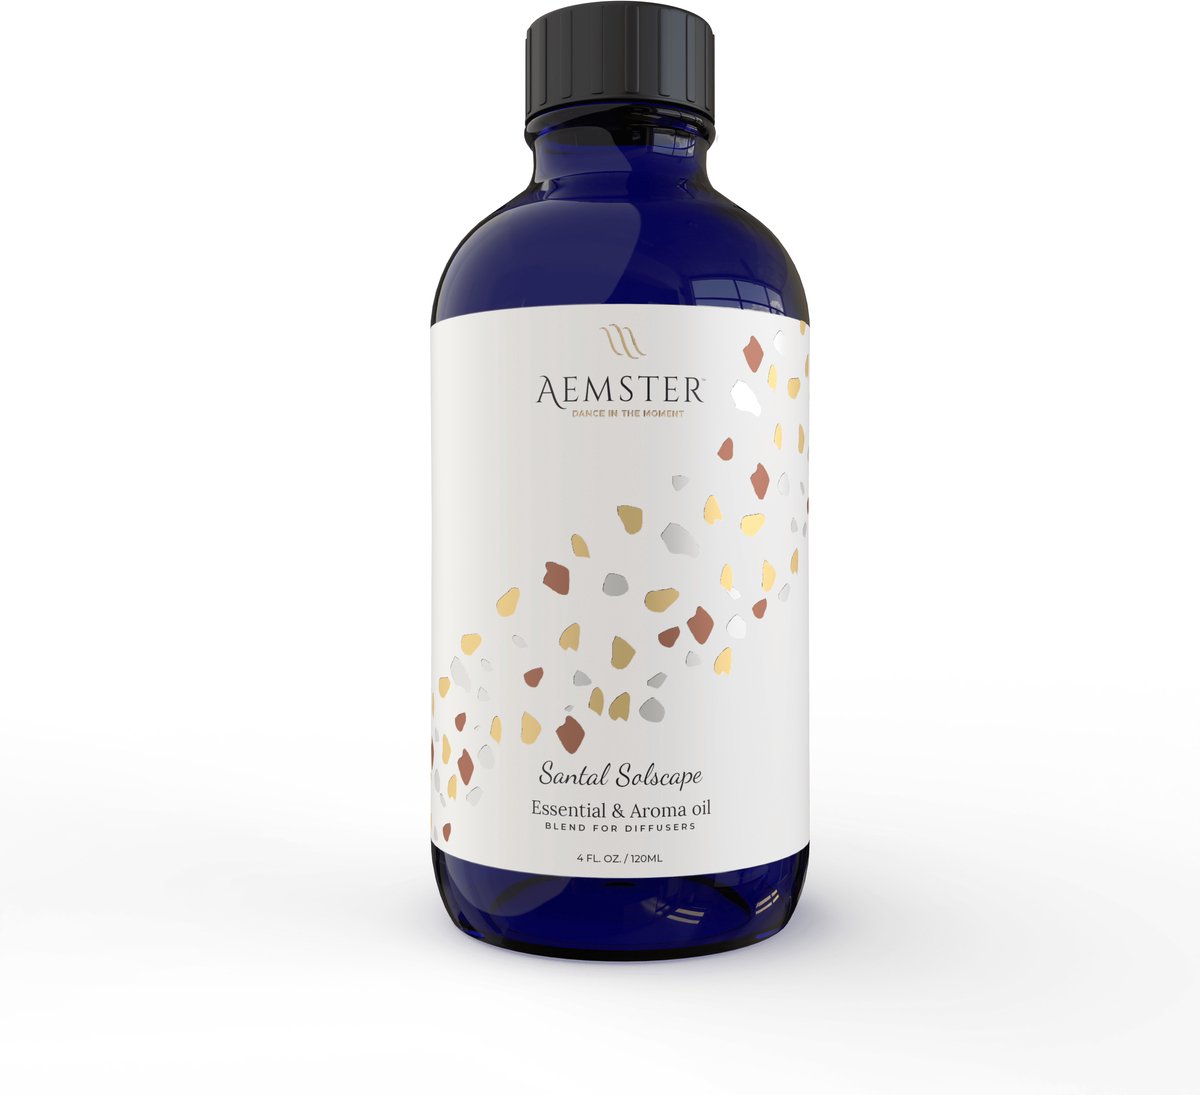 Aemster - Santal Solscape (120ml) - Geurolie - Huisparfum - Geschikt voor aroma diffusers